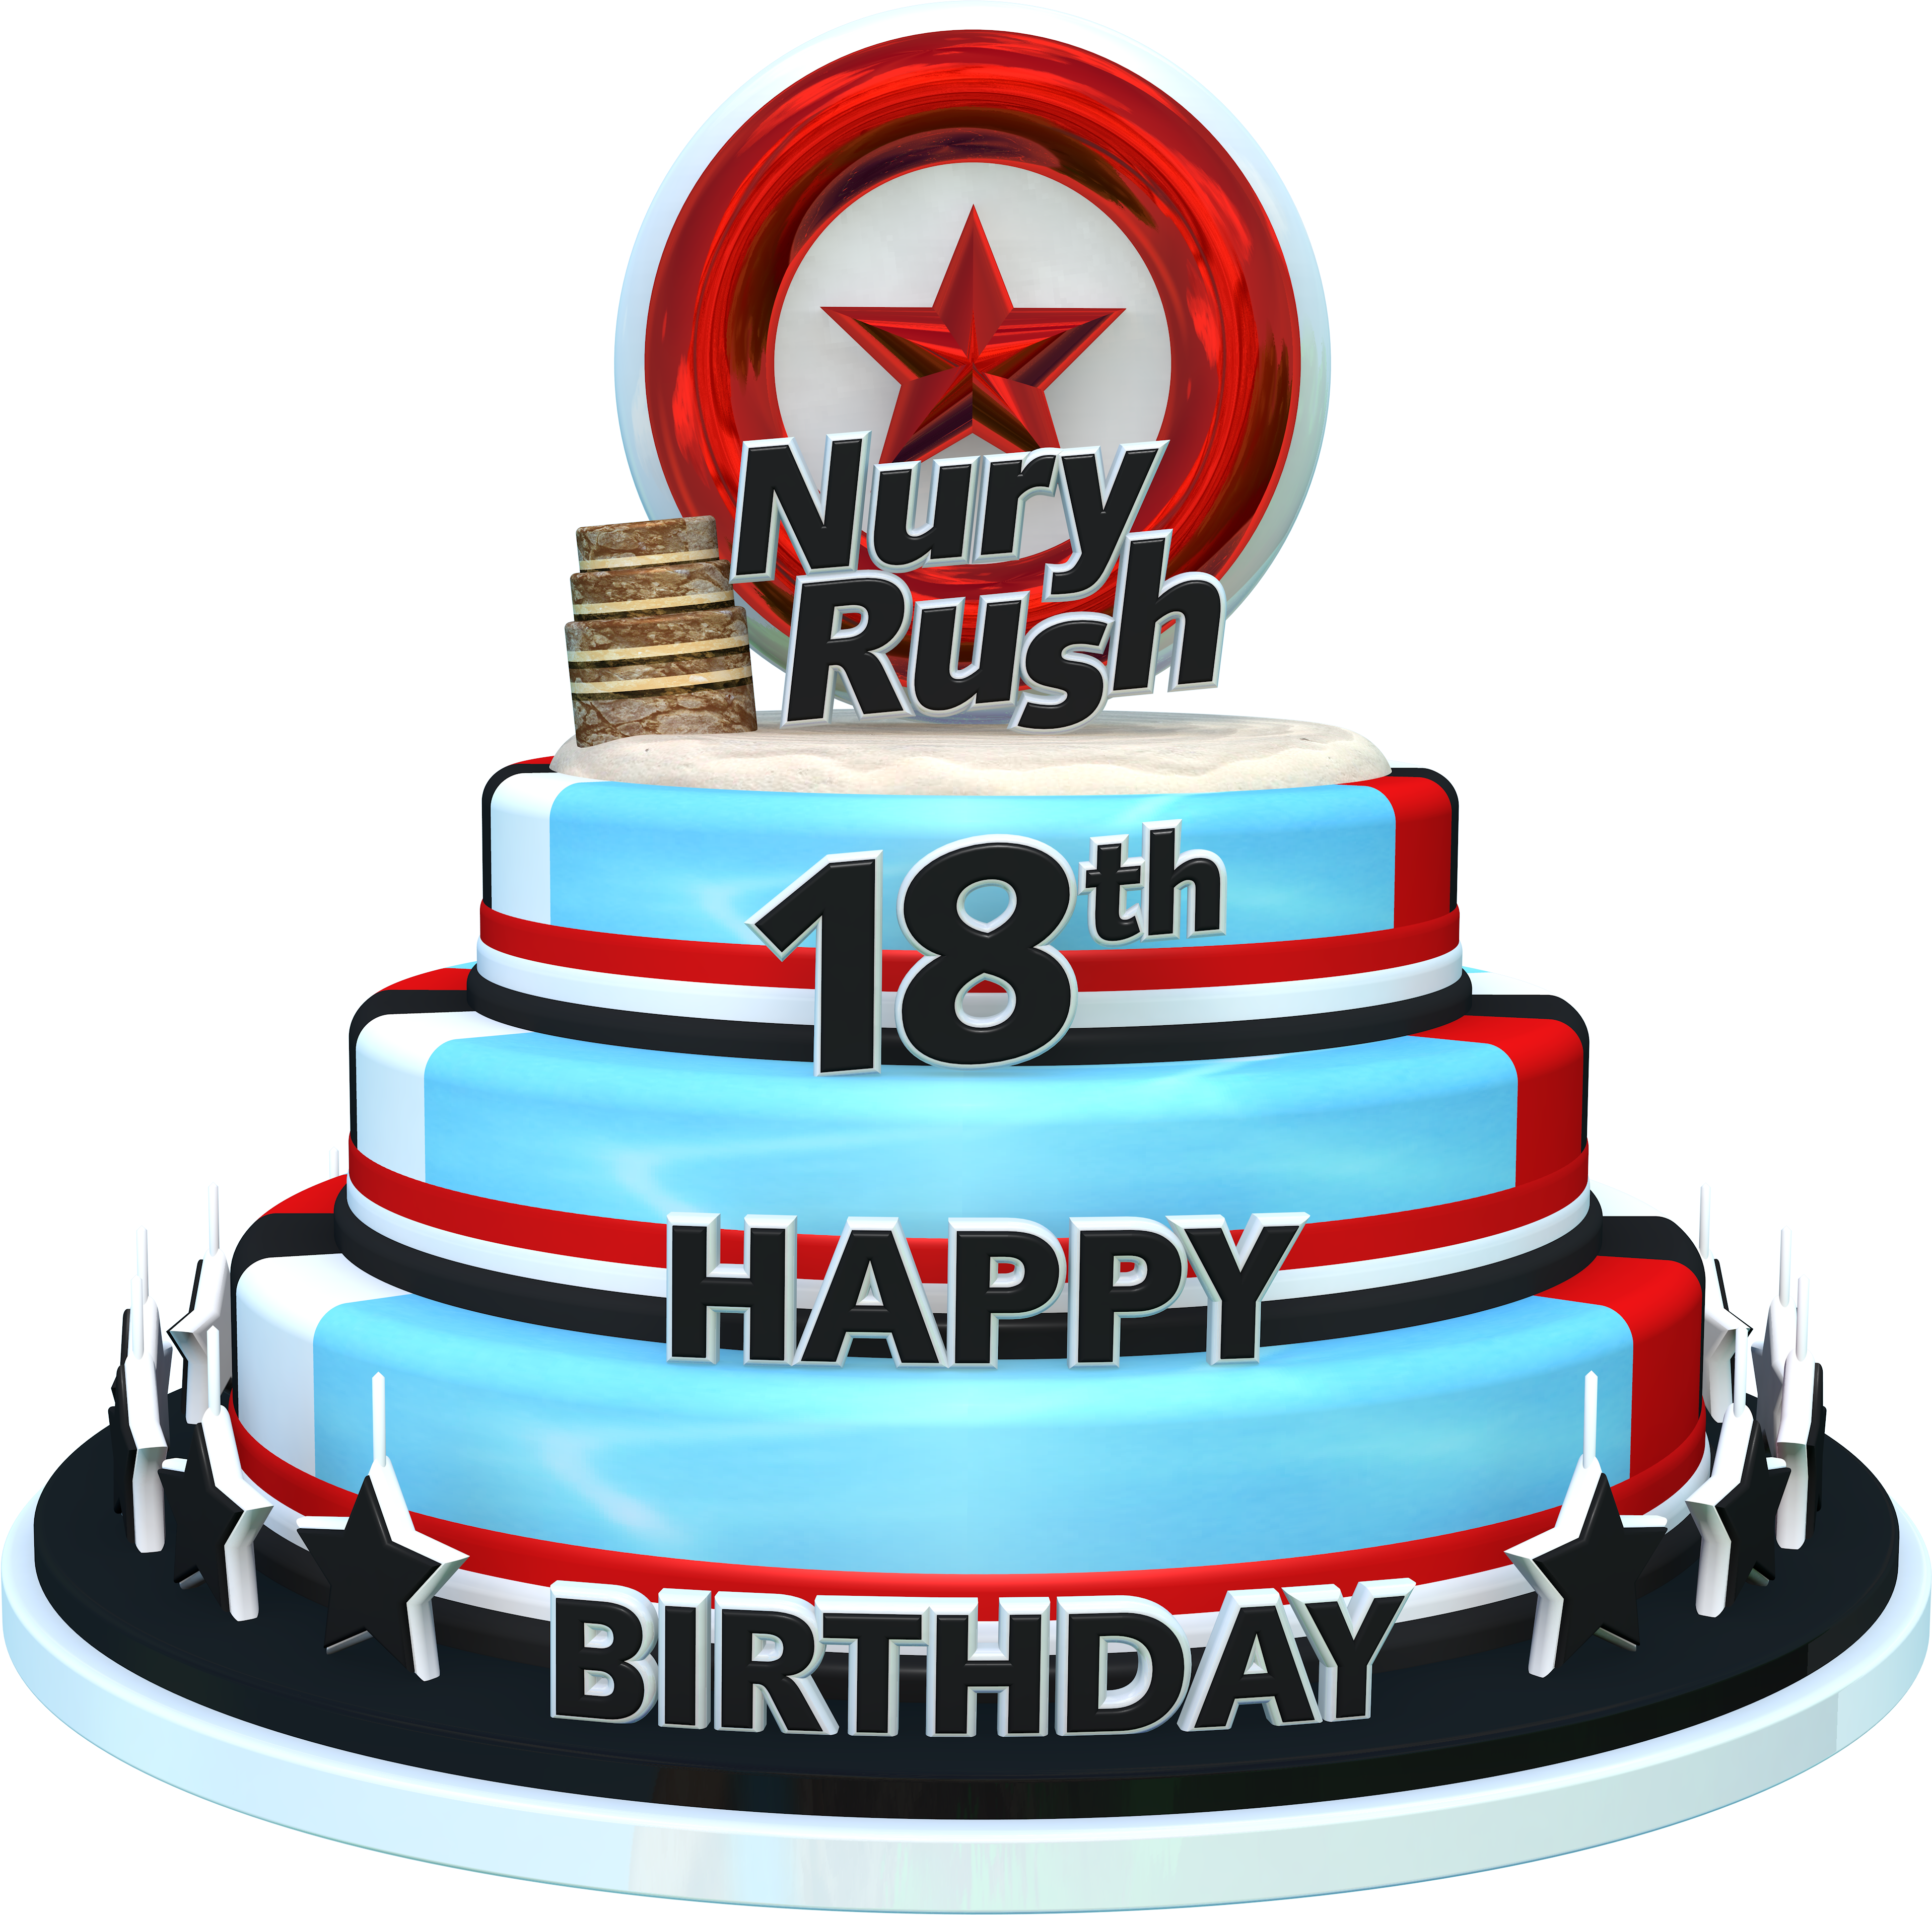 Nuryrush's Birthday 18th Cake Render By Nuryrush - Birthday Cake (4000x4000)